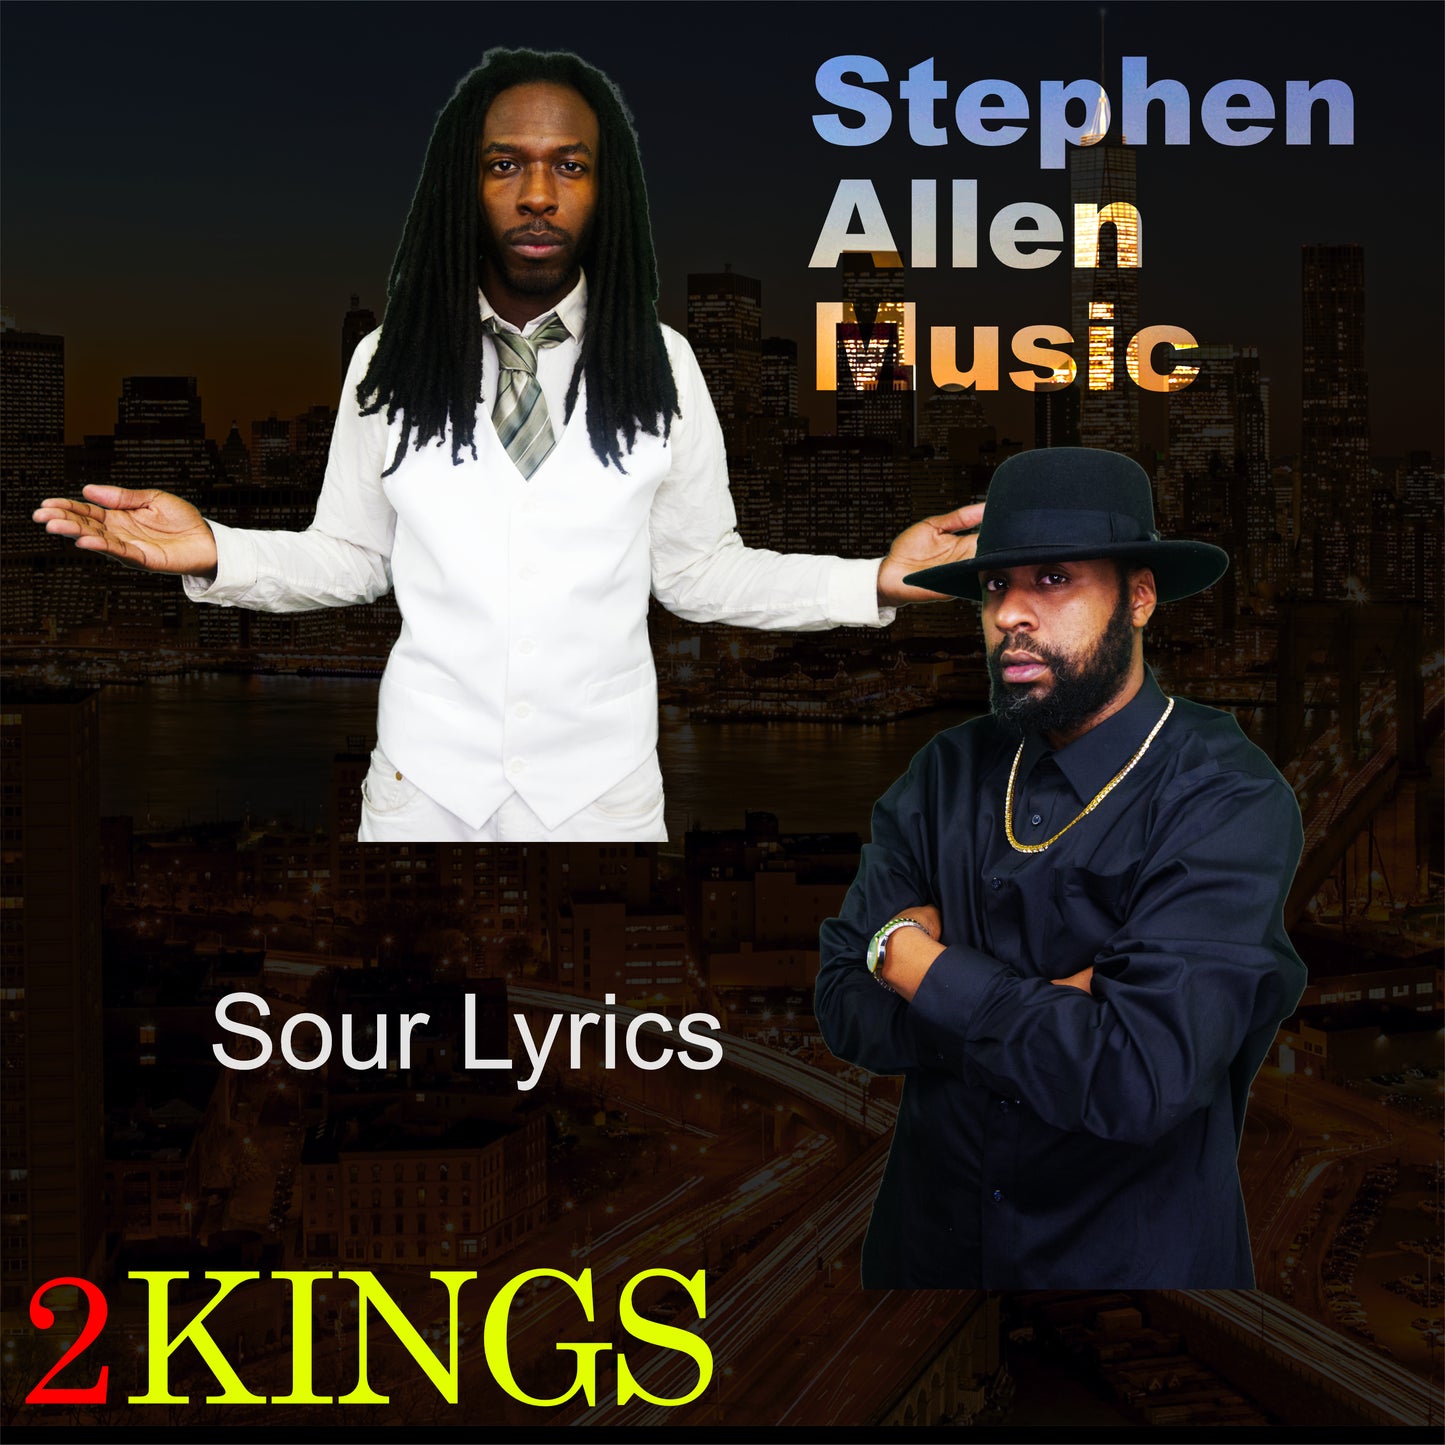 Stephen Allen Music and Sour Lyrics - 2 Kings ( Ep )